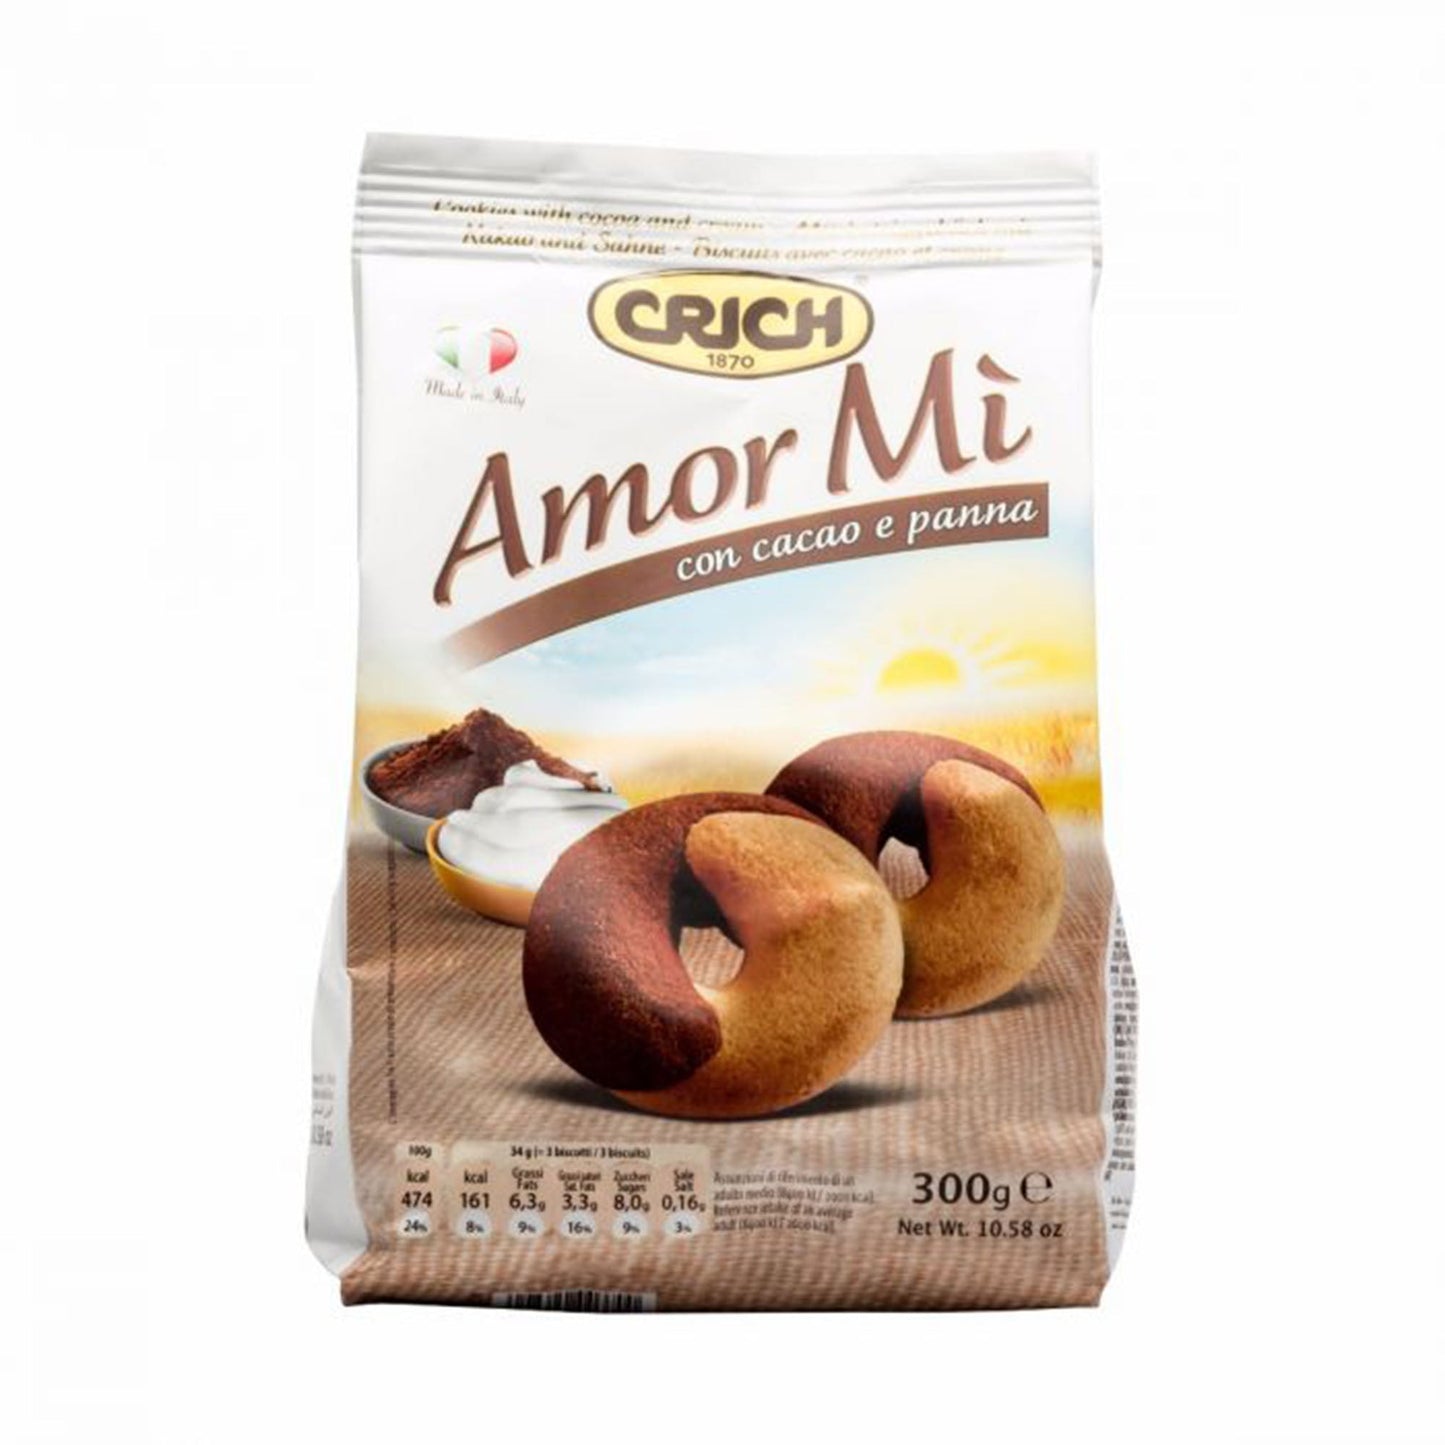 Crich Amormi Cookies 300Gr